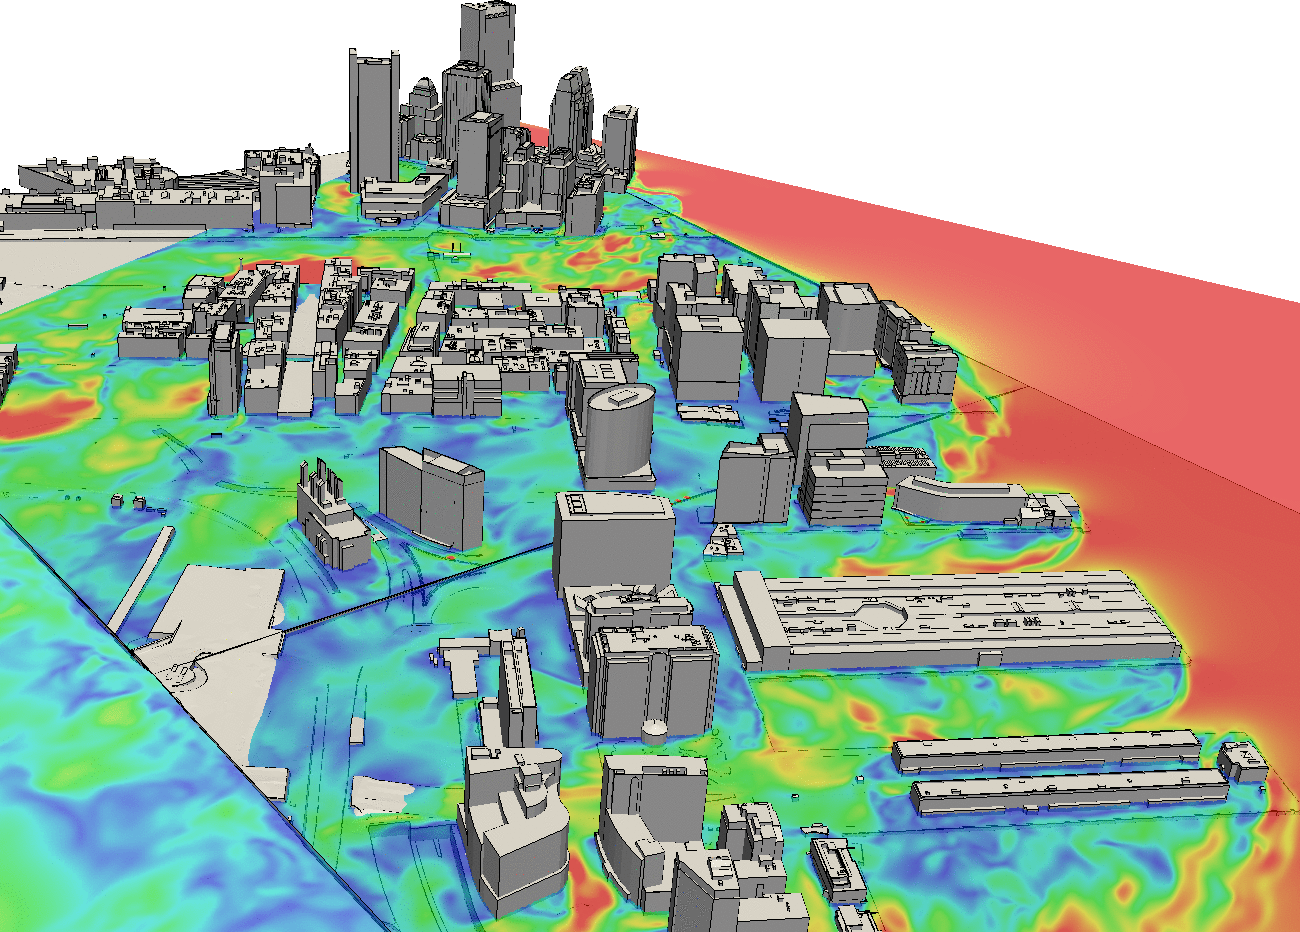 boston harbor wind velocity, transient flow simulation results